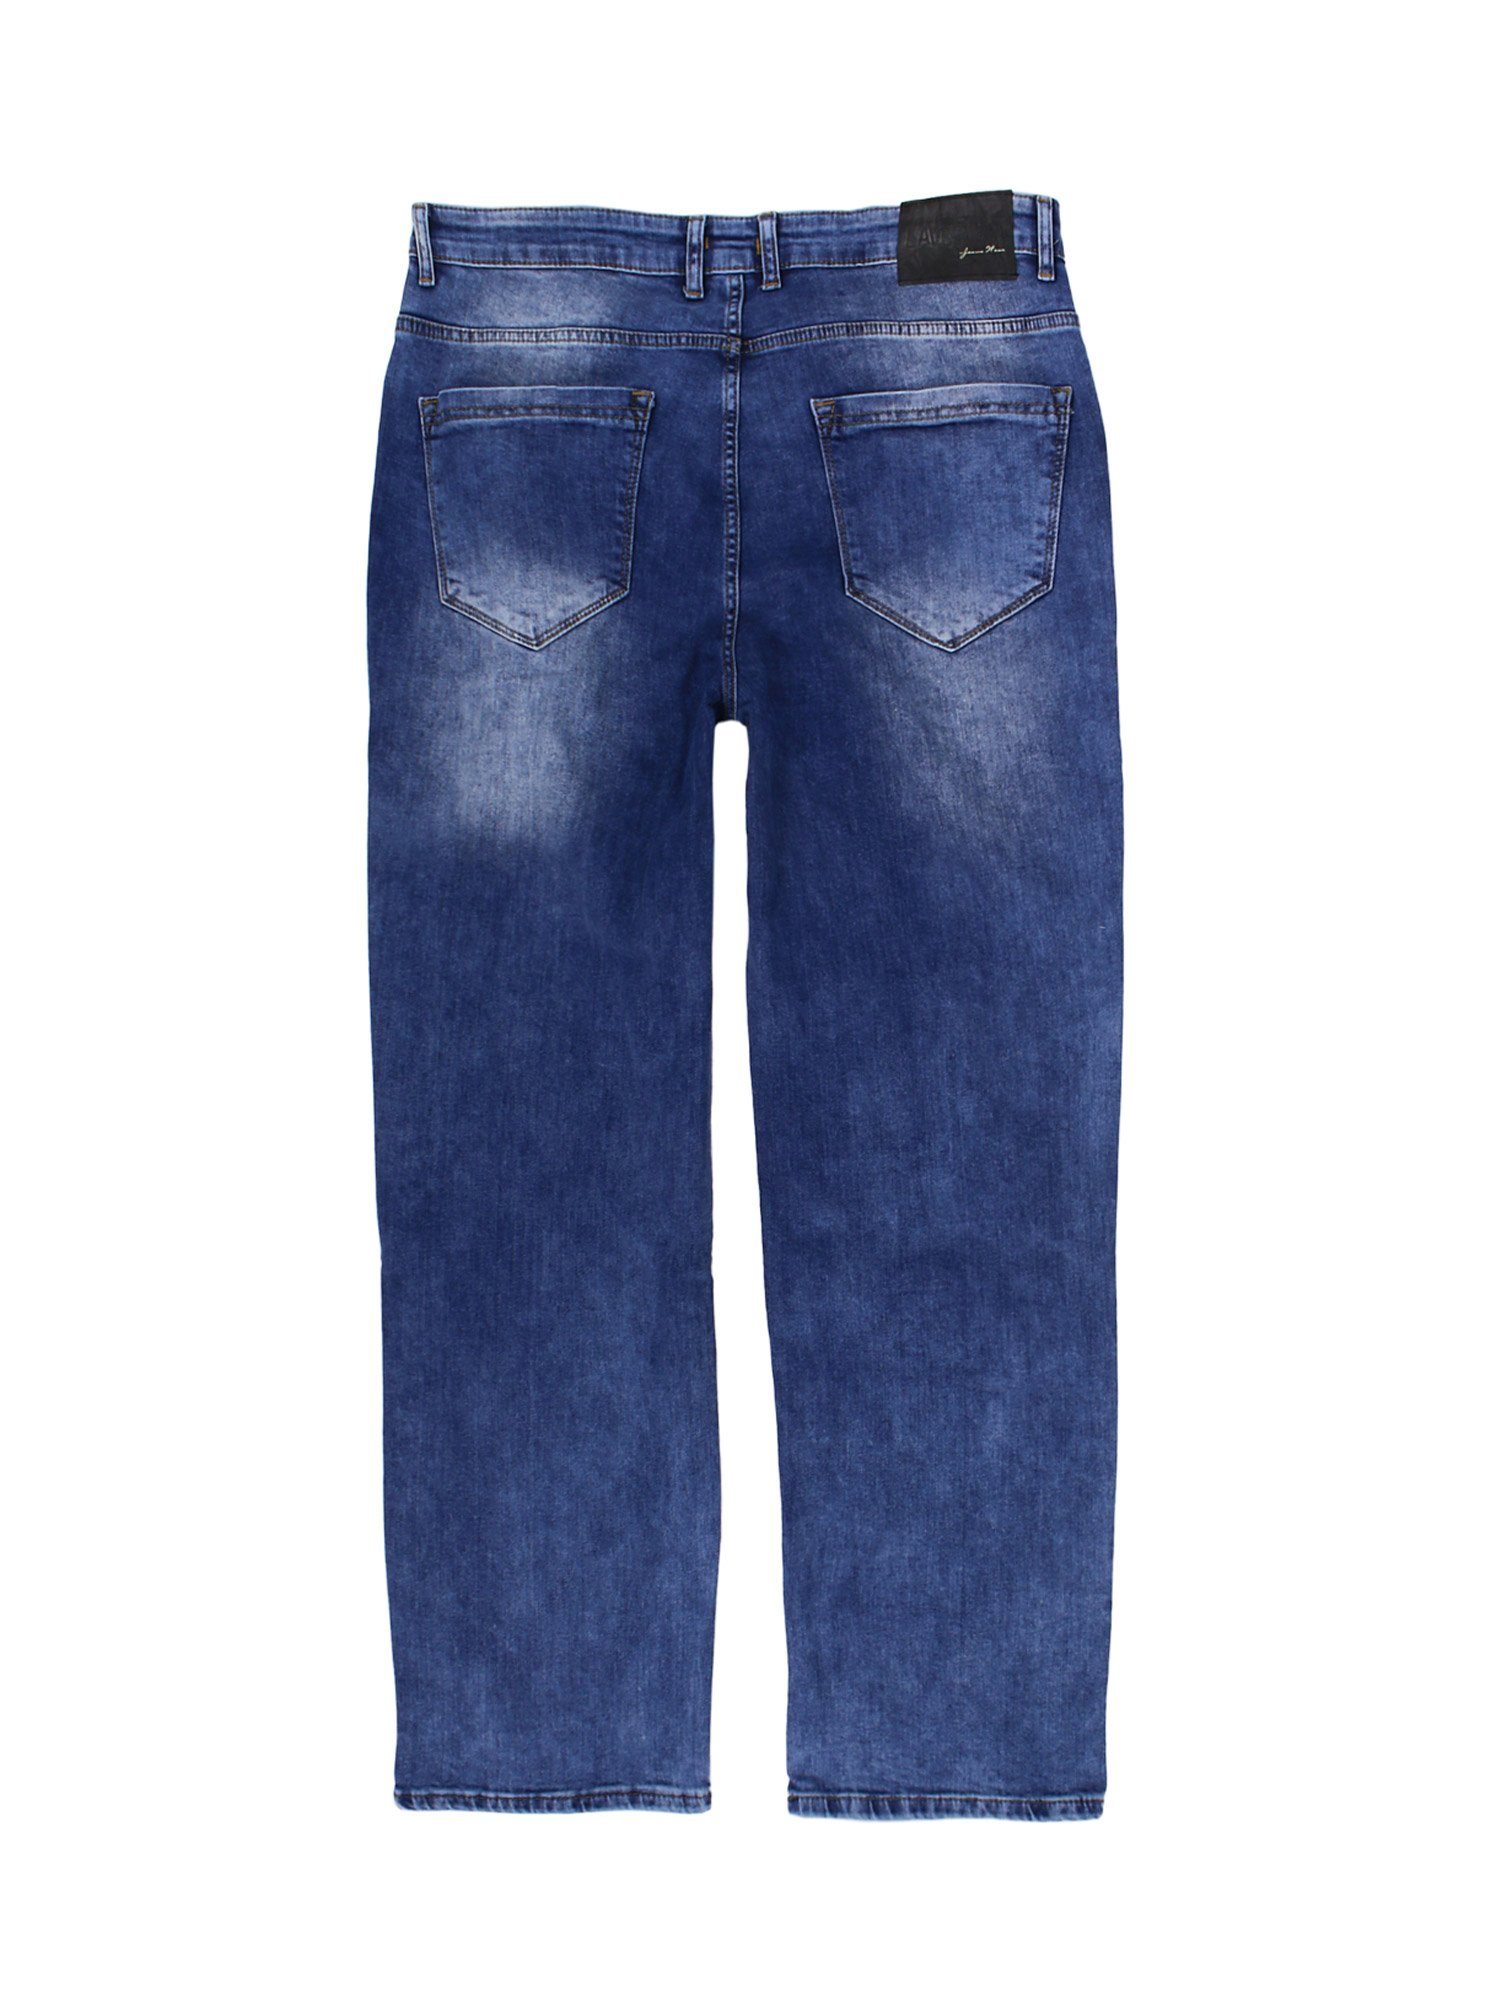 Lavecchia Comfort-fit-Jeans Übergrößen Jeanshose stoneblau Elasthan Herren Stretch mit LV-501